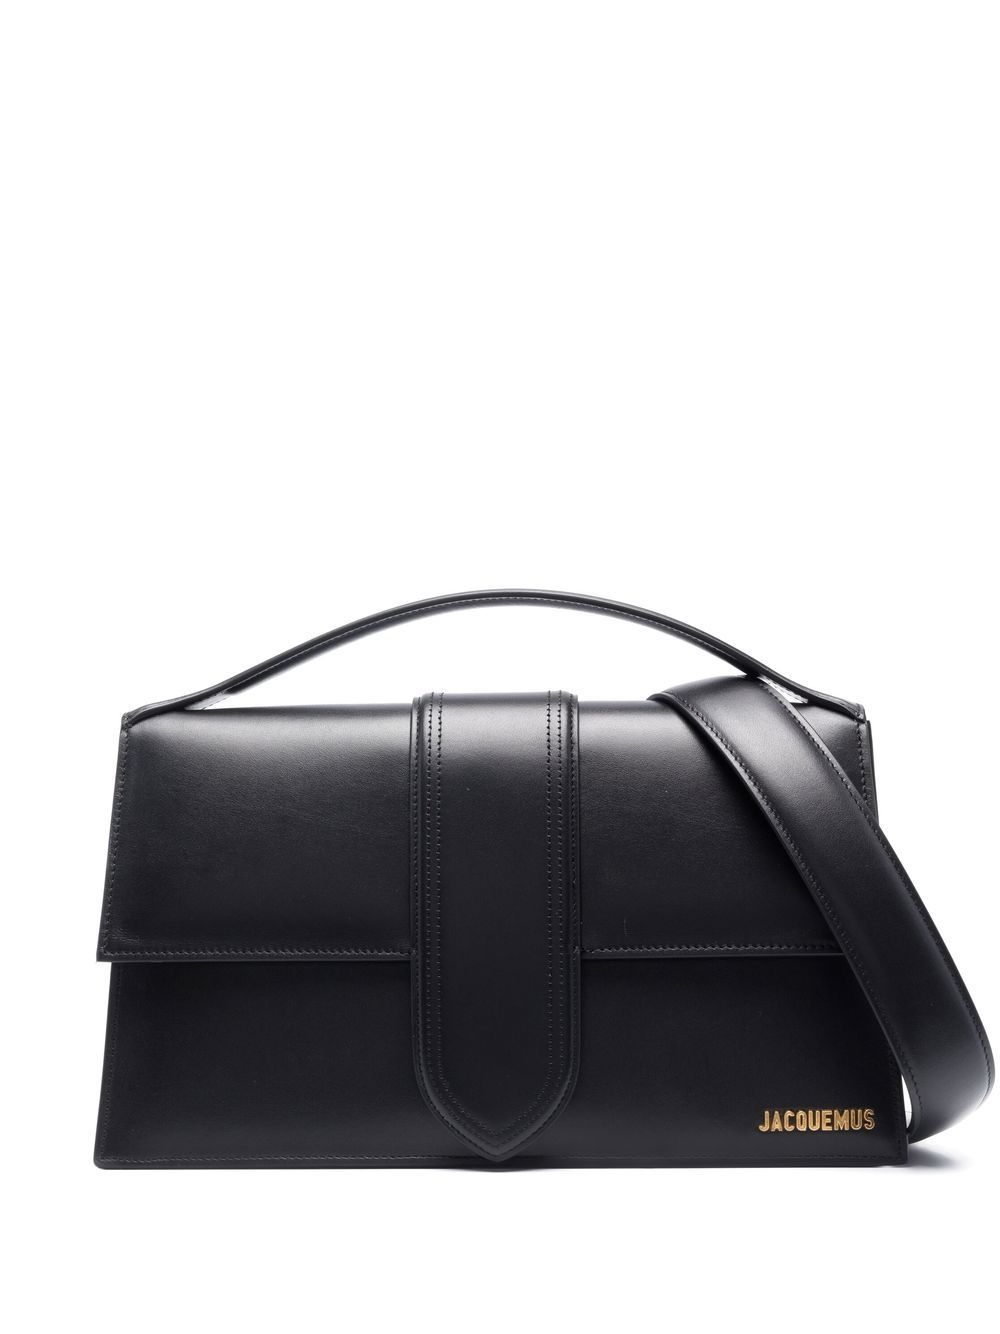 Jacquemus Le Bambinou Leather Tote Bag In Black